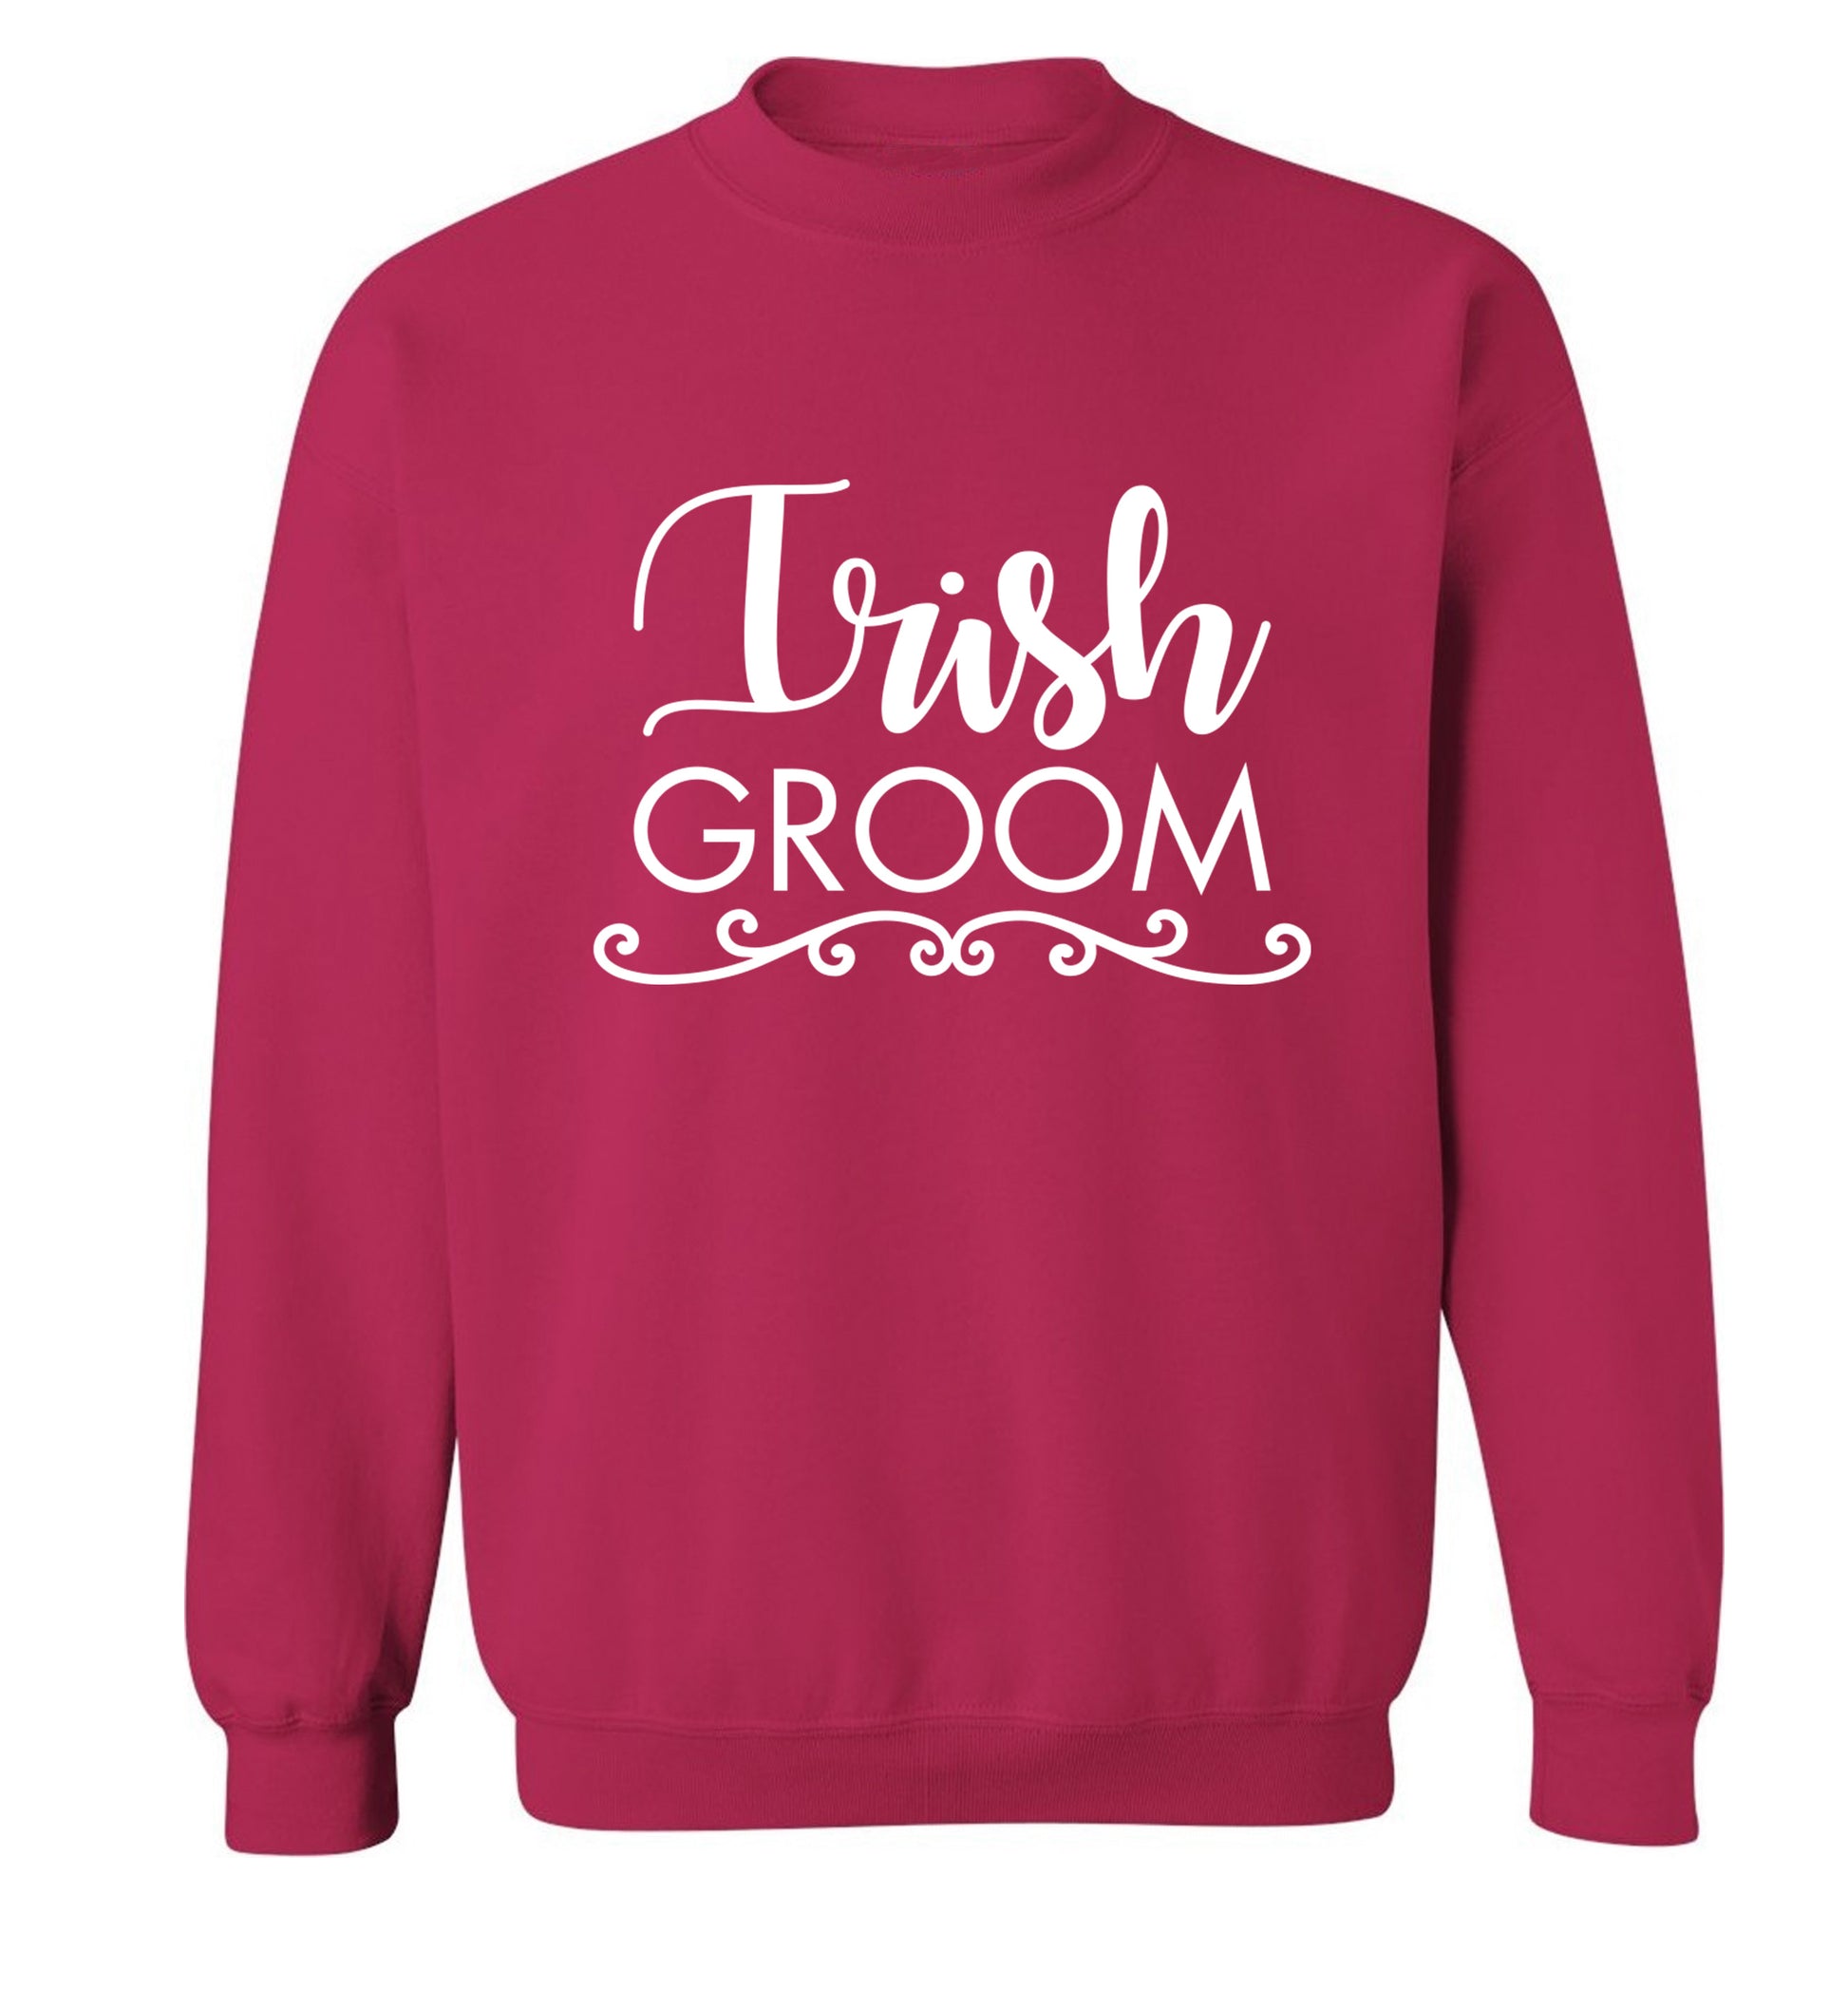 Irish groom Adult's unisex pink Sweater 2XL